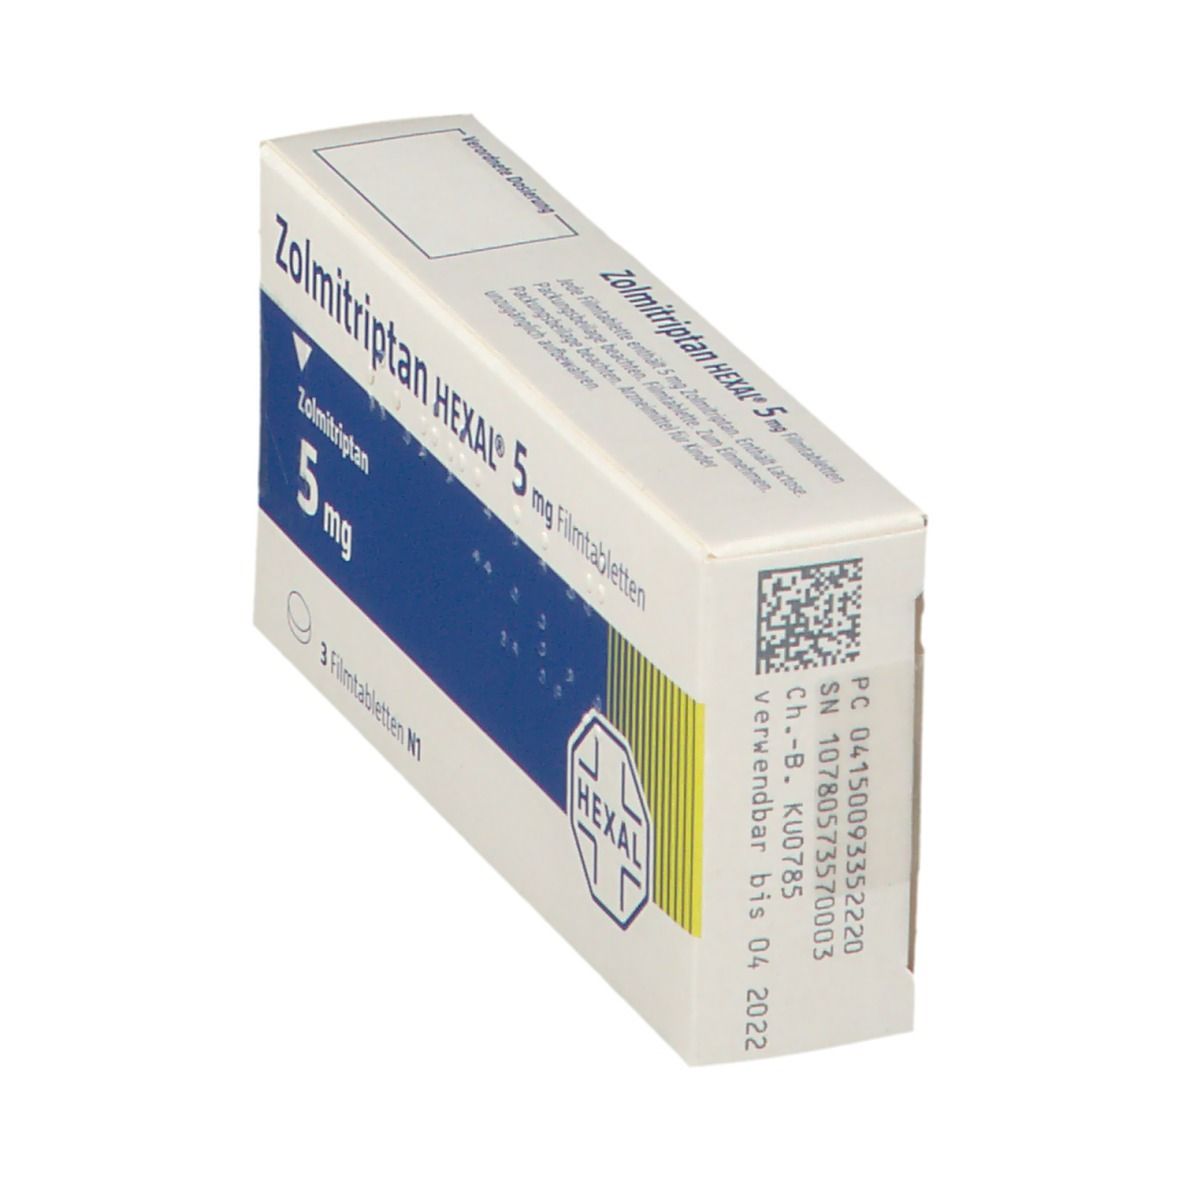 Zolmitriptan HEXAL® 5 mg